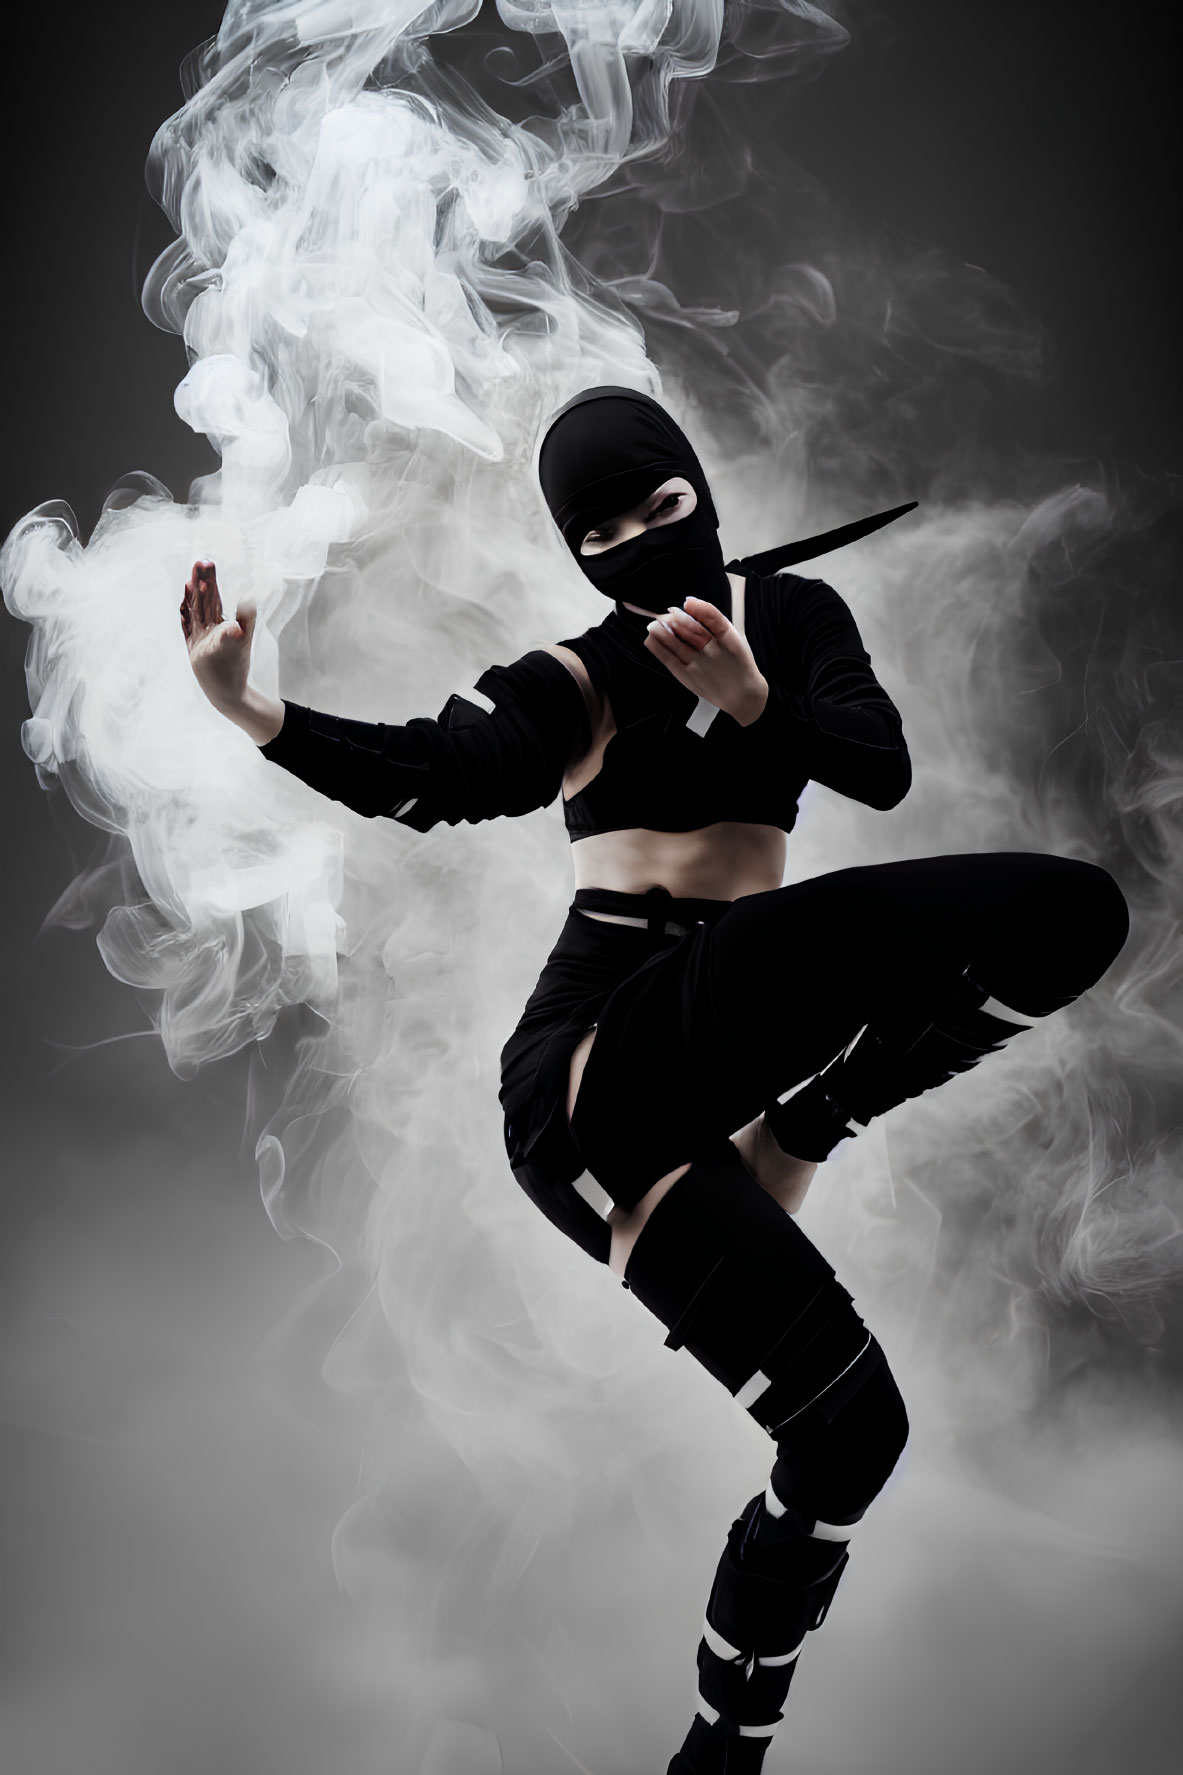 Mysterious Ninja in Black Attire Strikes Martial Arts Pose